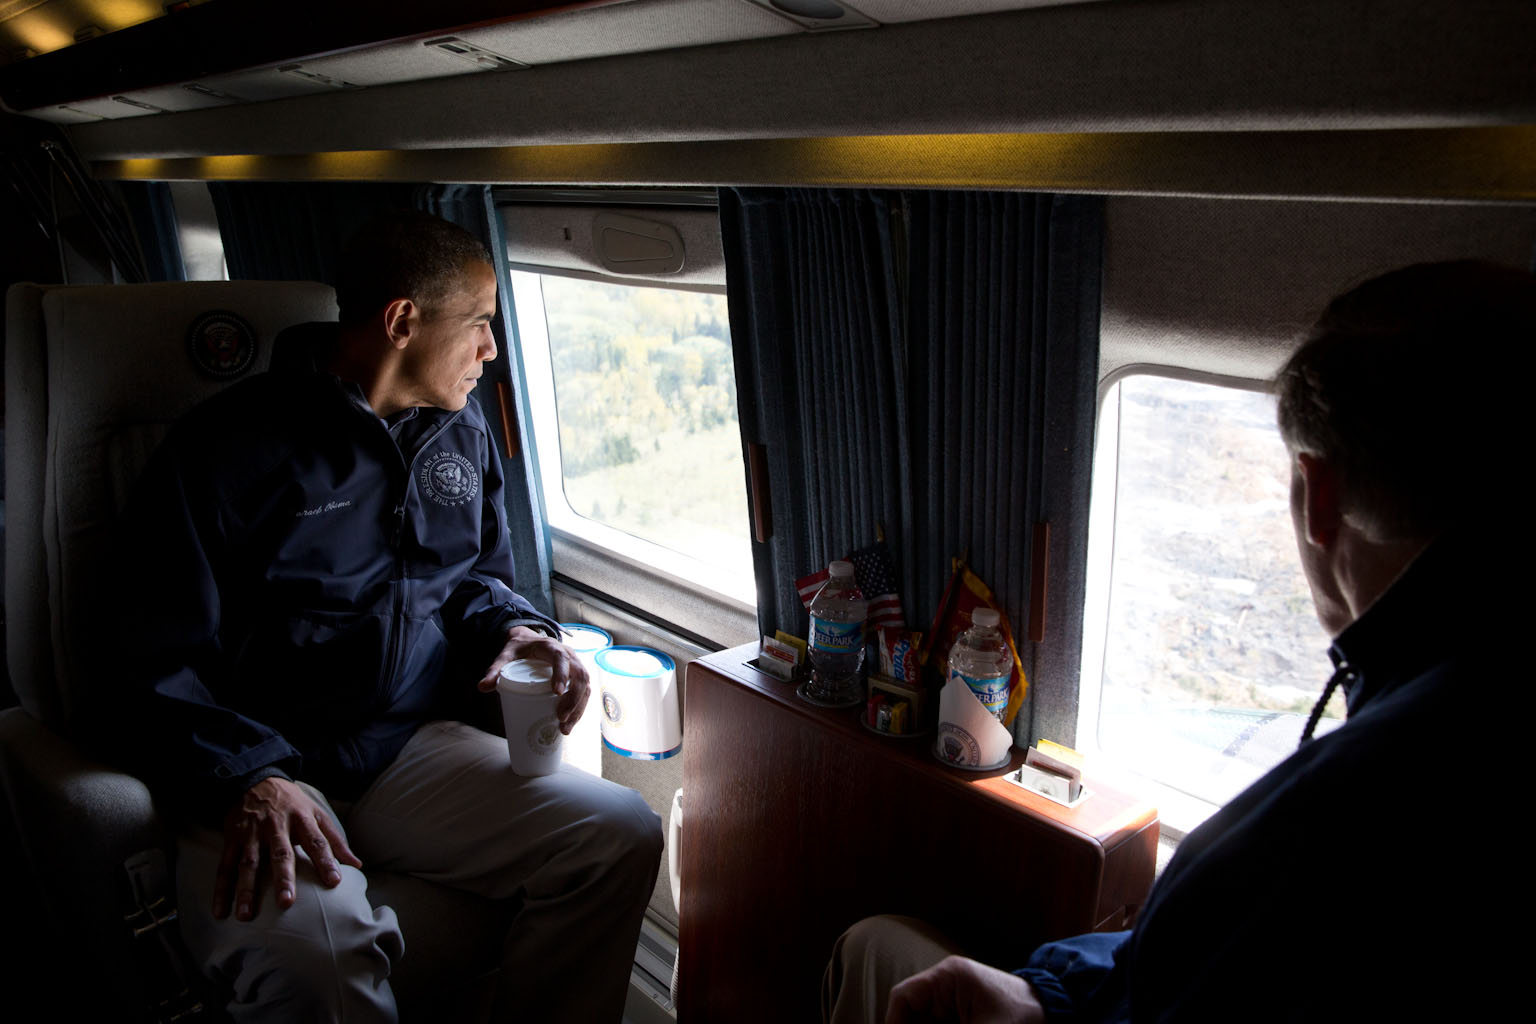 President Barack Obama and Washington Gov. Jay Inslee view the mudslide damage from Marine One, in Oso, Wash